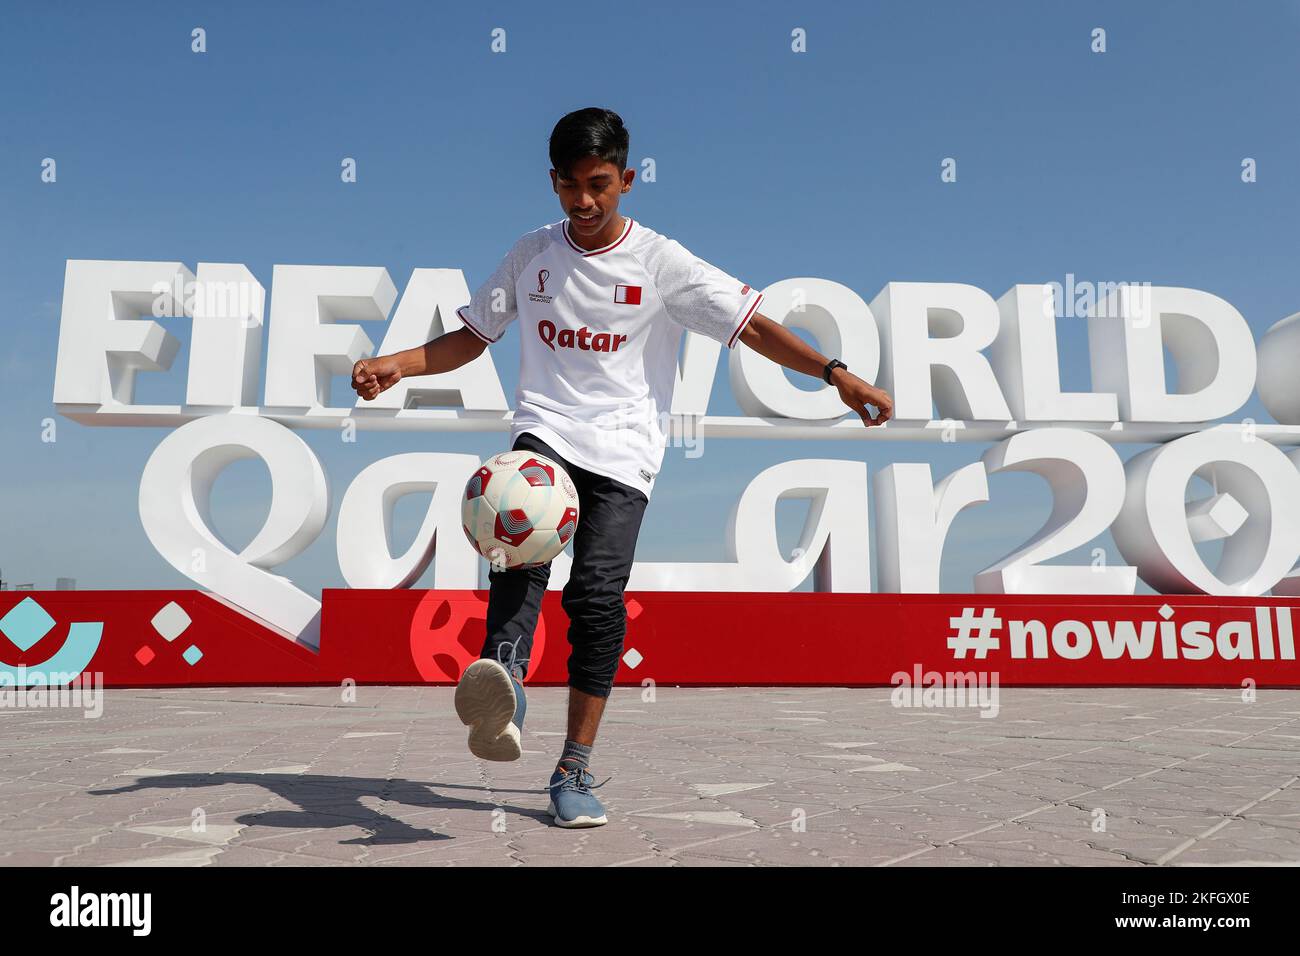 Qatar, UAE. 18th Nov, 2022. FIFA World Cup Football, Pre-Games General  Views; Qatar World Cup 2022 shirt Credit: Action Plus Sports/Alamy Live  News Stock Photo - Alamy